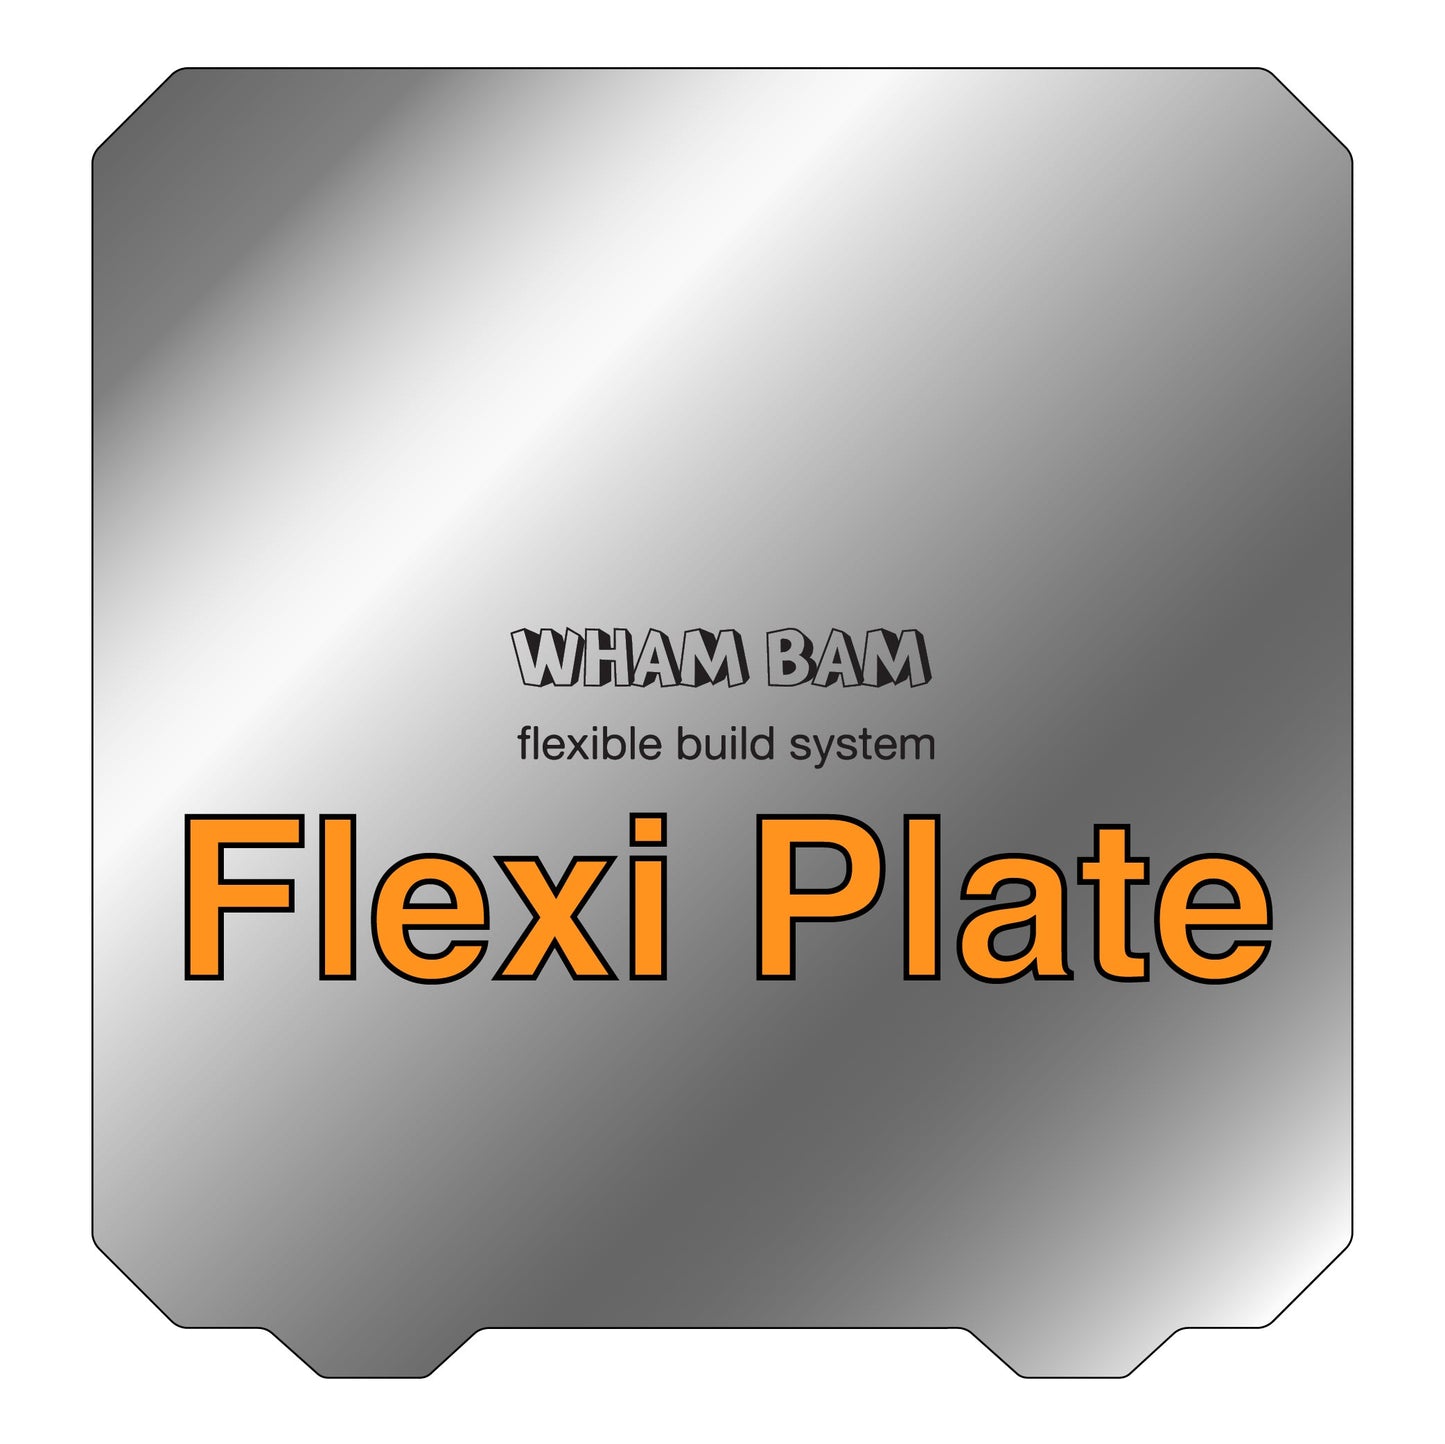 Flexi Plate Only (No Build Surface) - 220 x 220 - Anet A8, Monoprice Maker Select Plus, Robo R2